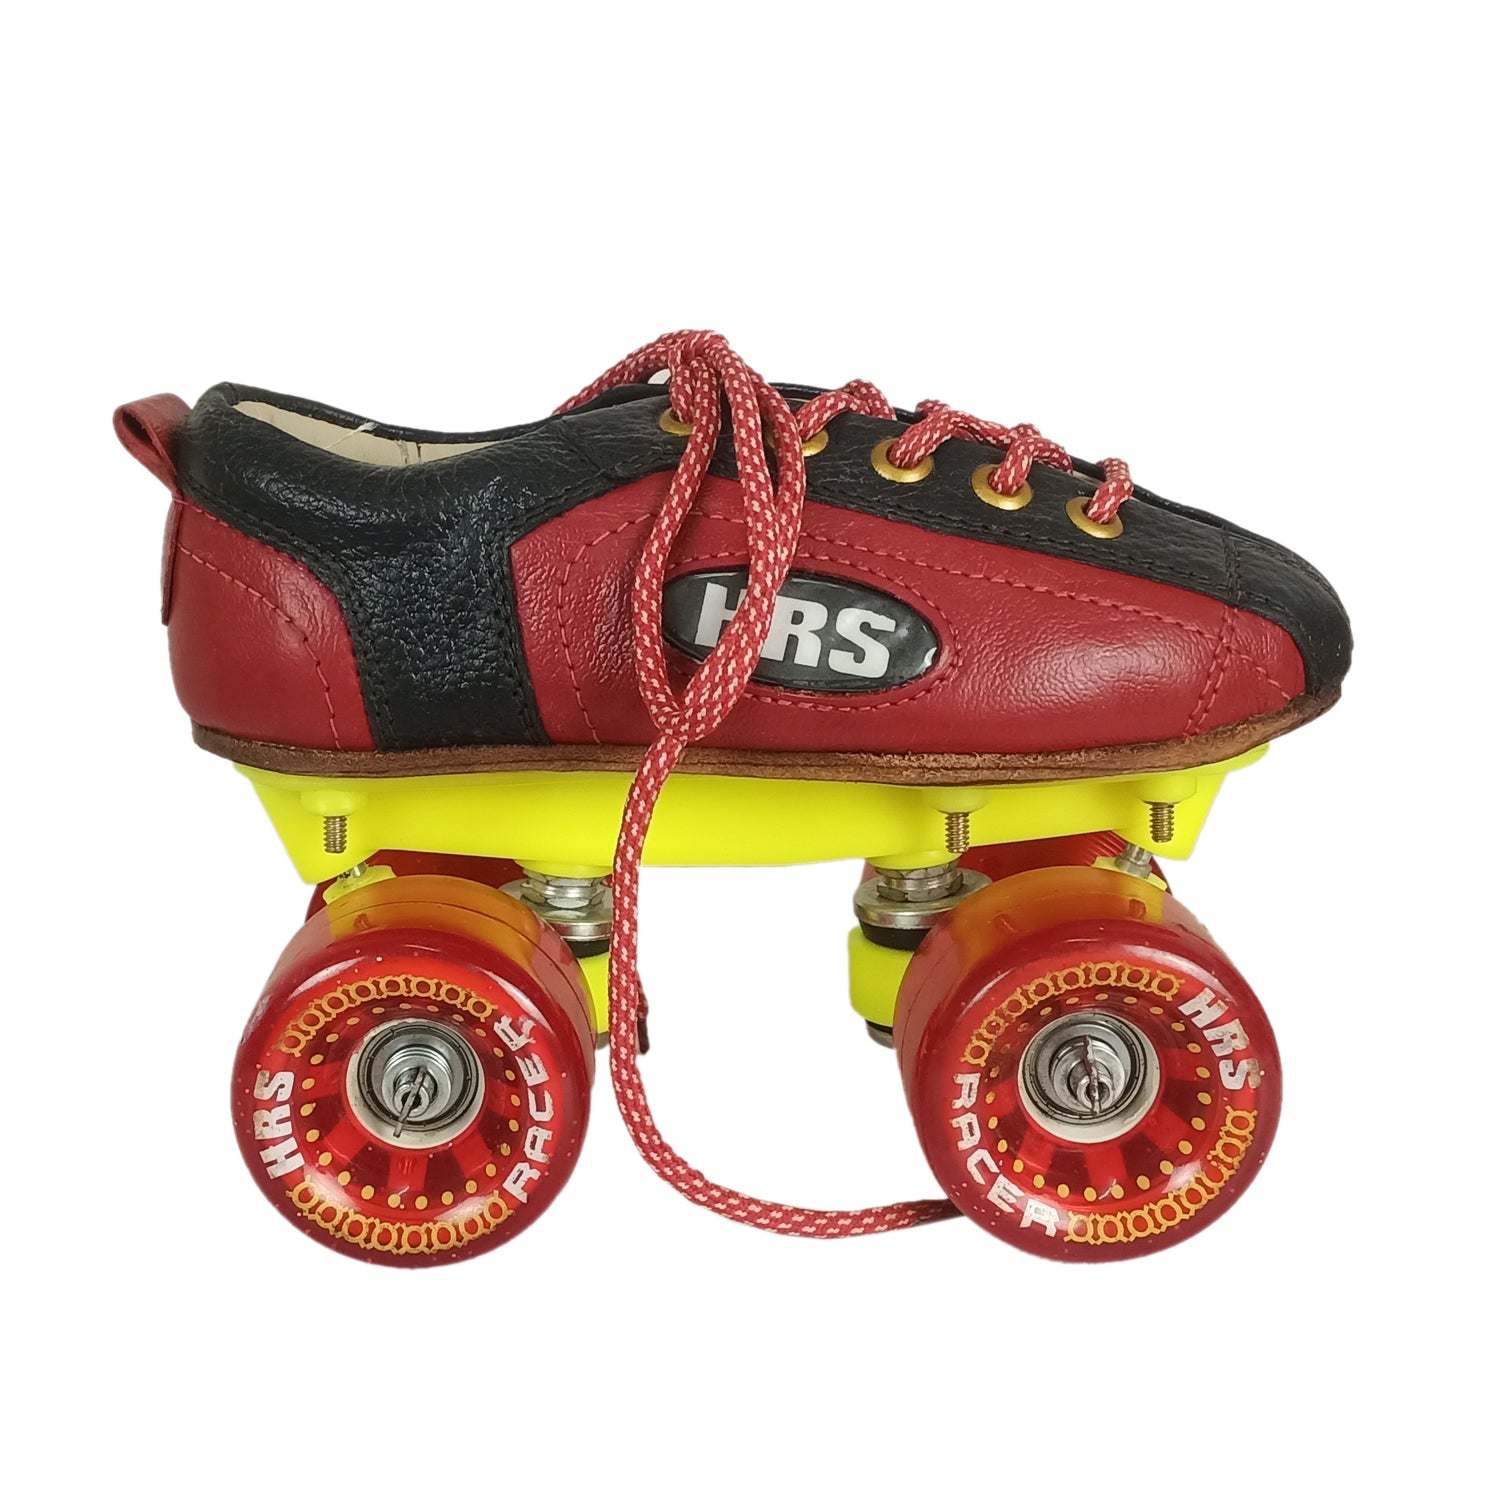 HRS SK-203 Racer Shoe Skates with Free Bag, Red - Best Price online Prokicksports.com